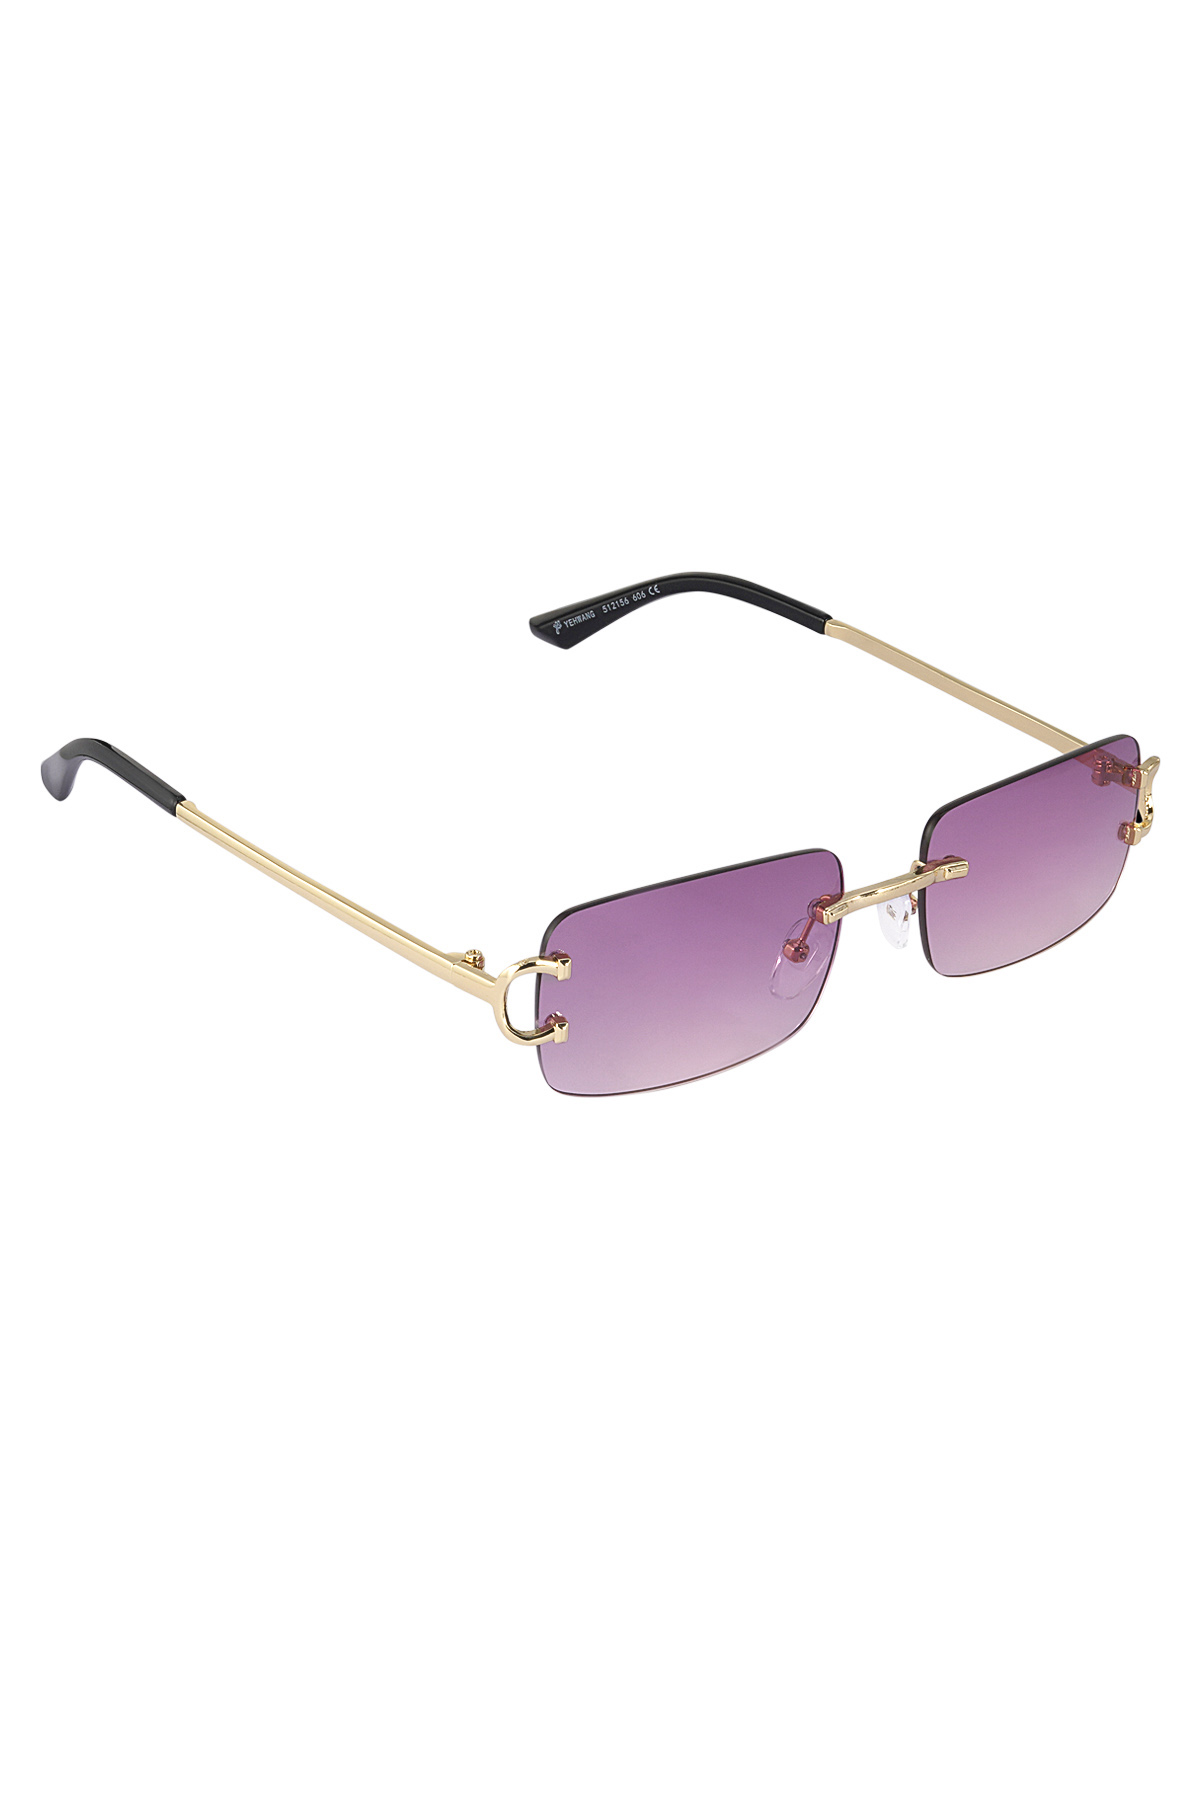 Sunglasses Sunbeam - purple h5 